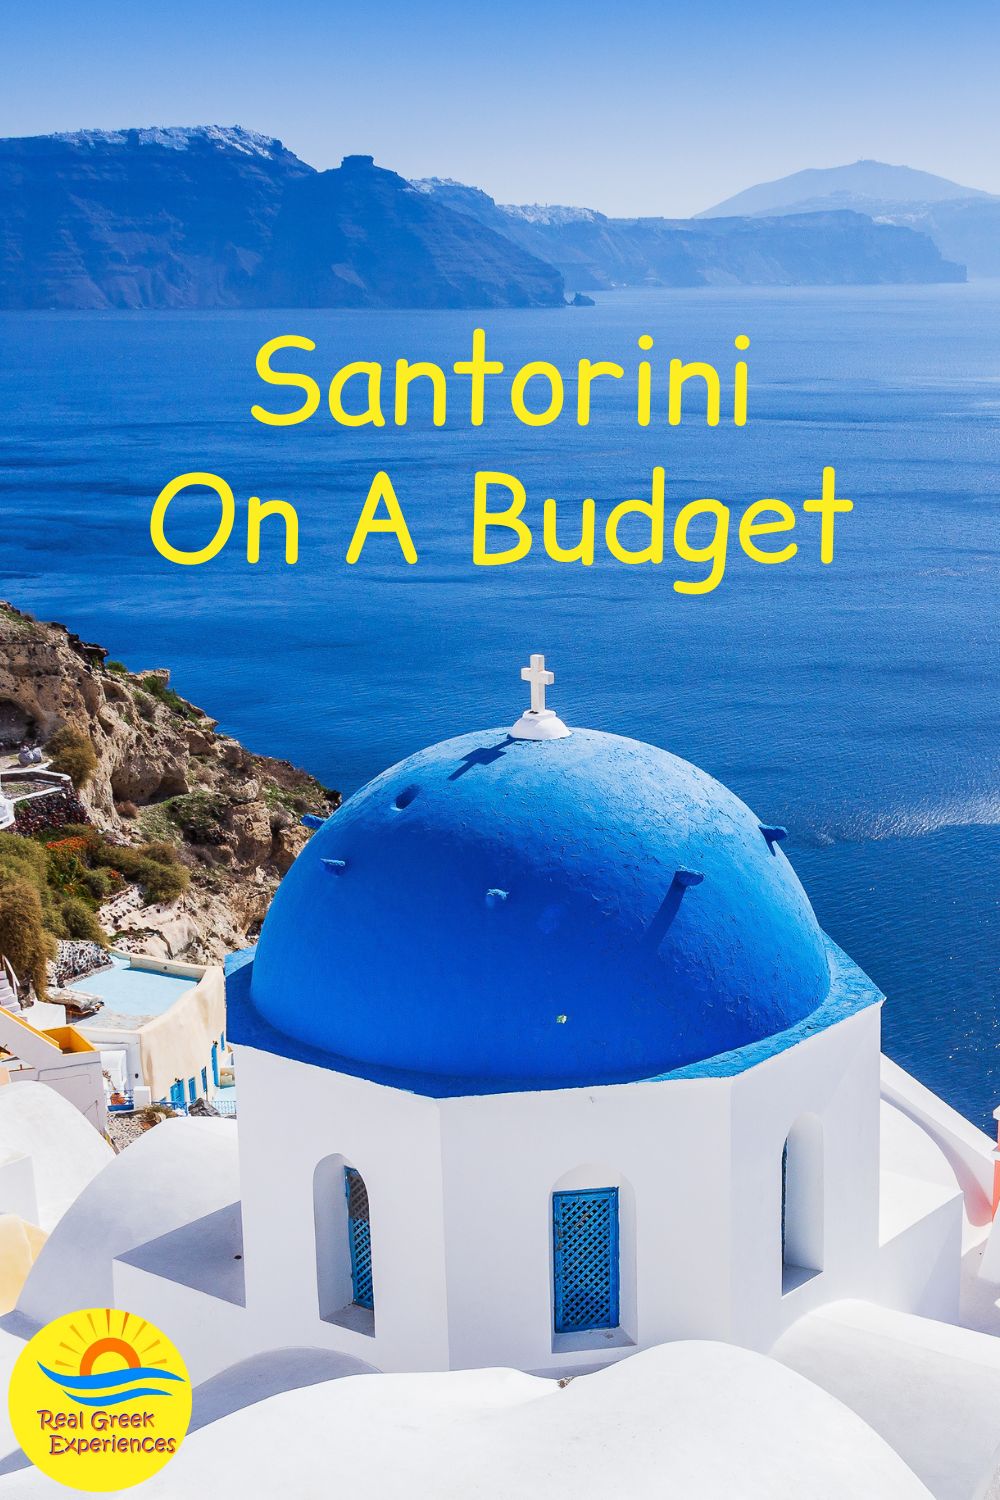 Santorini on a budget